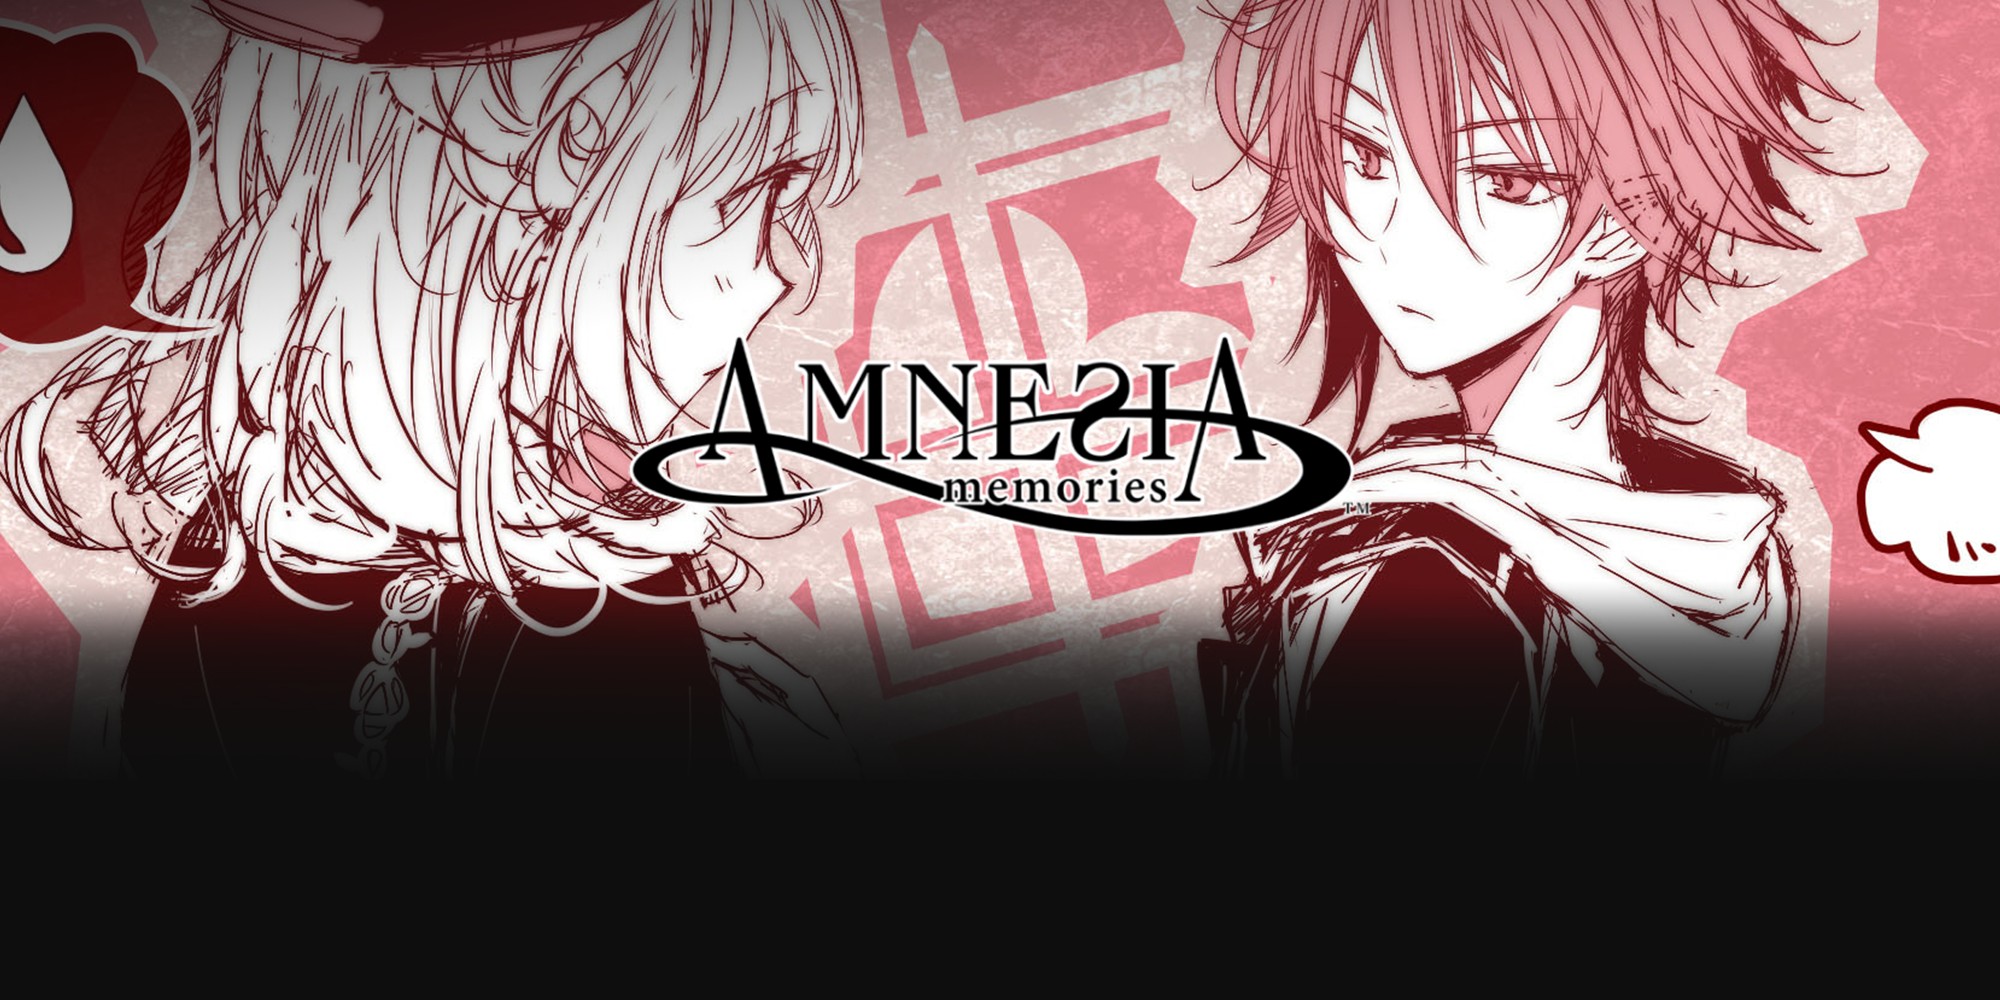 amnesia memories characters